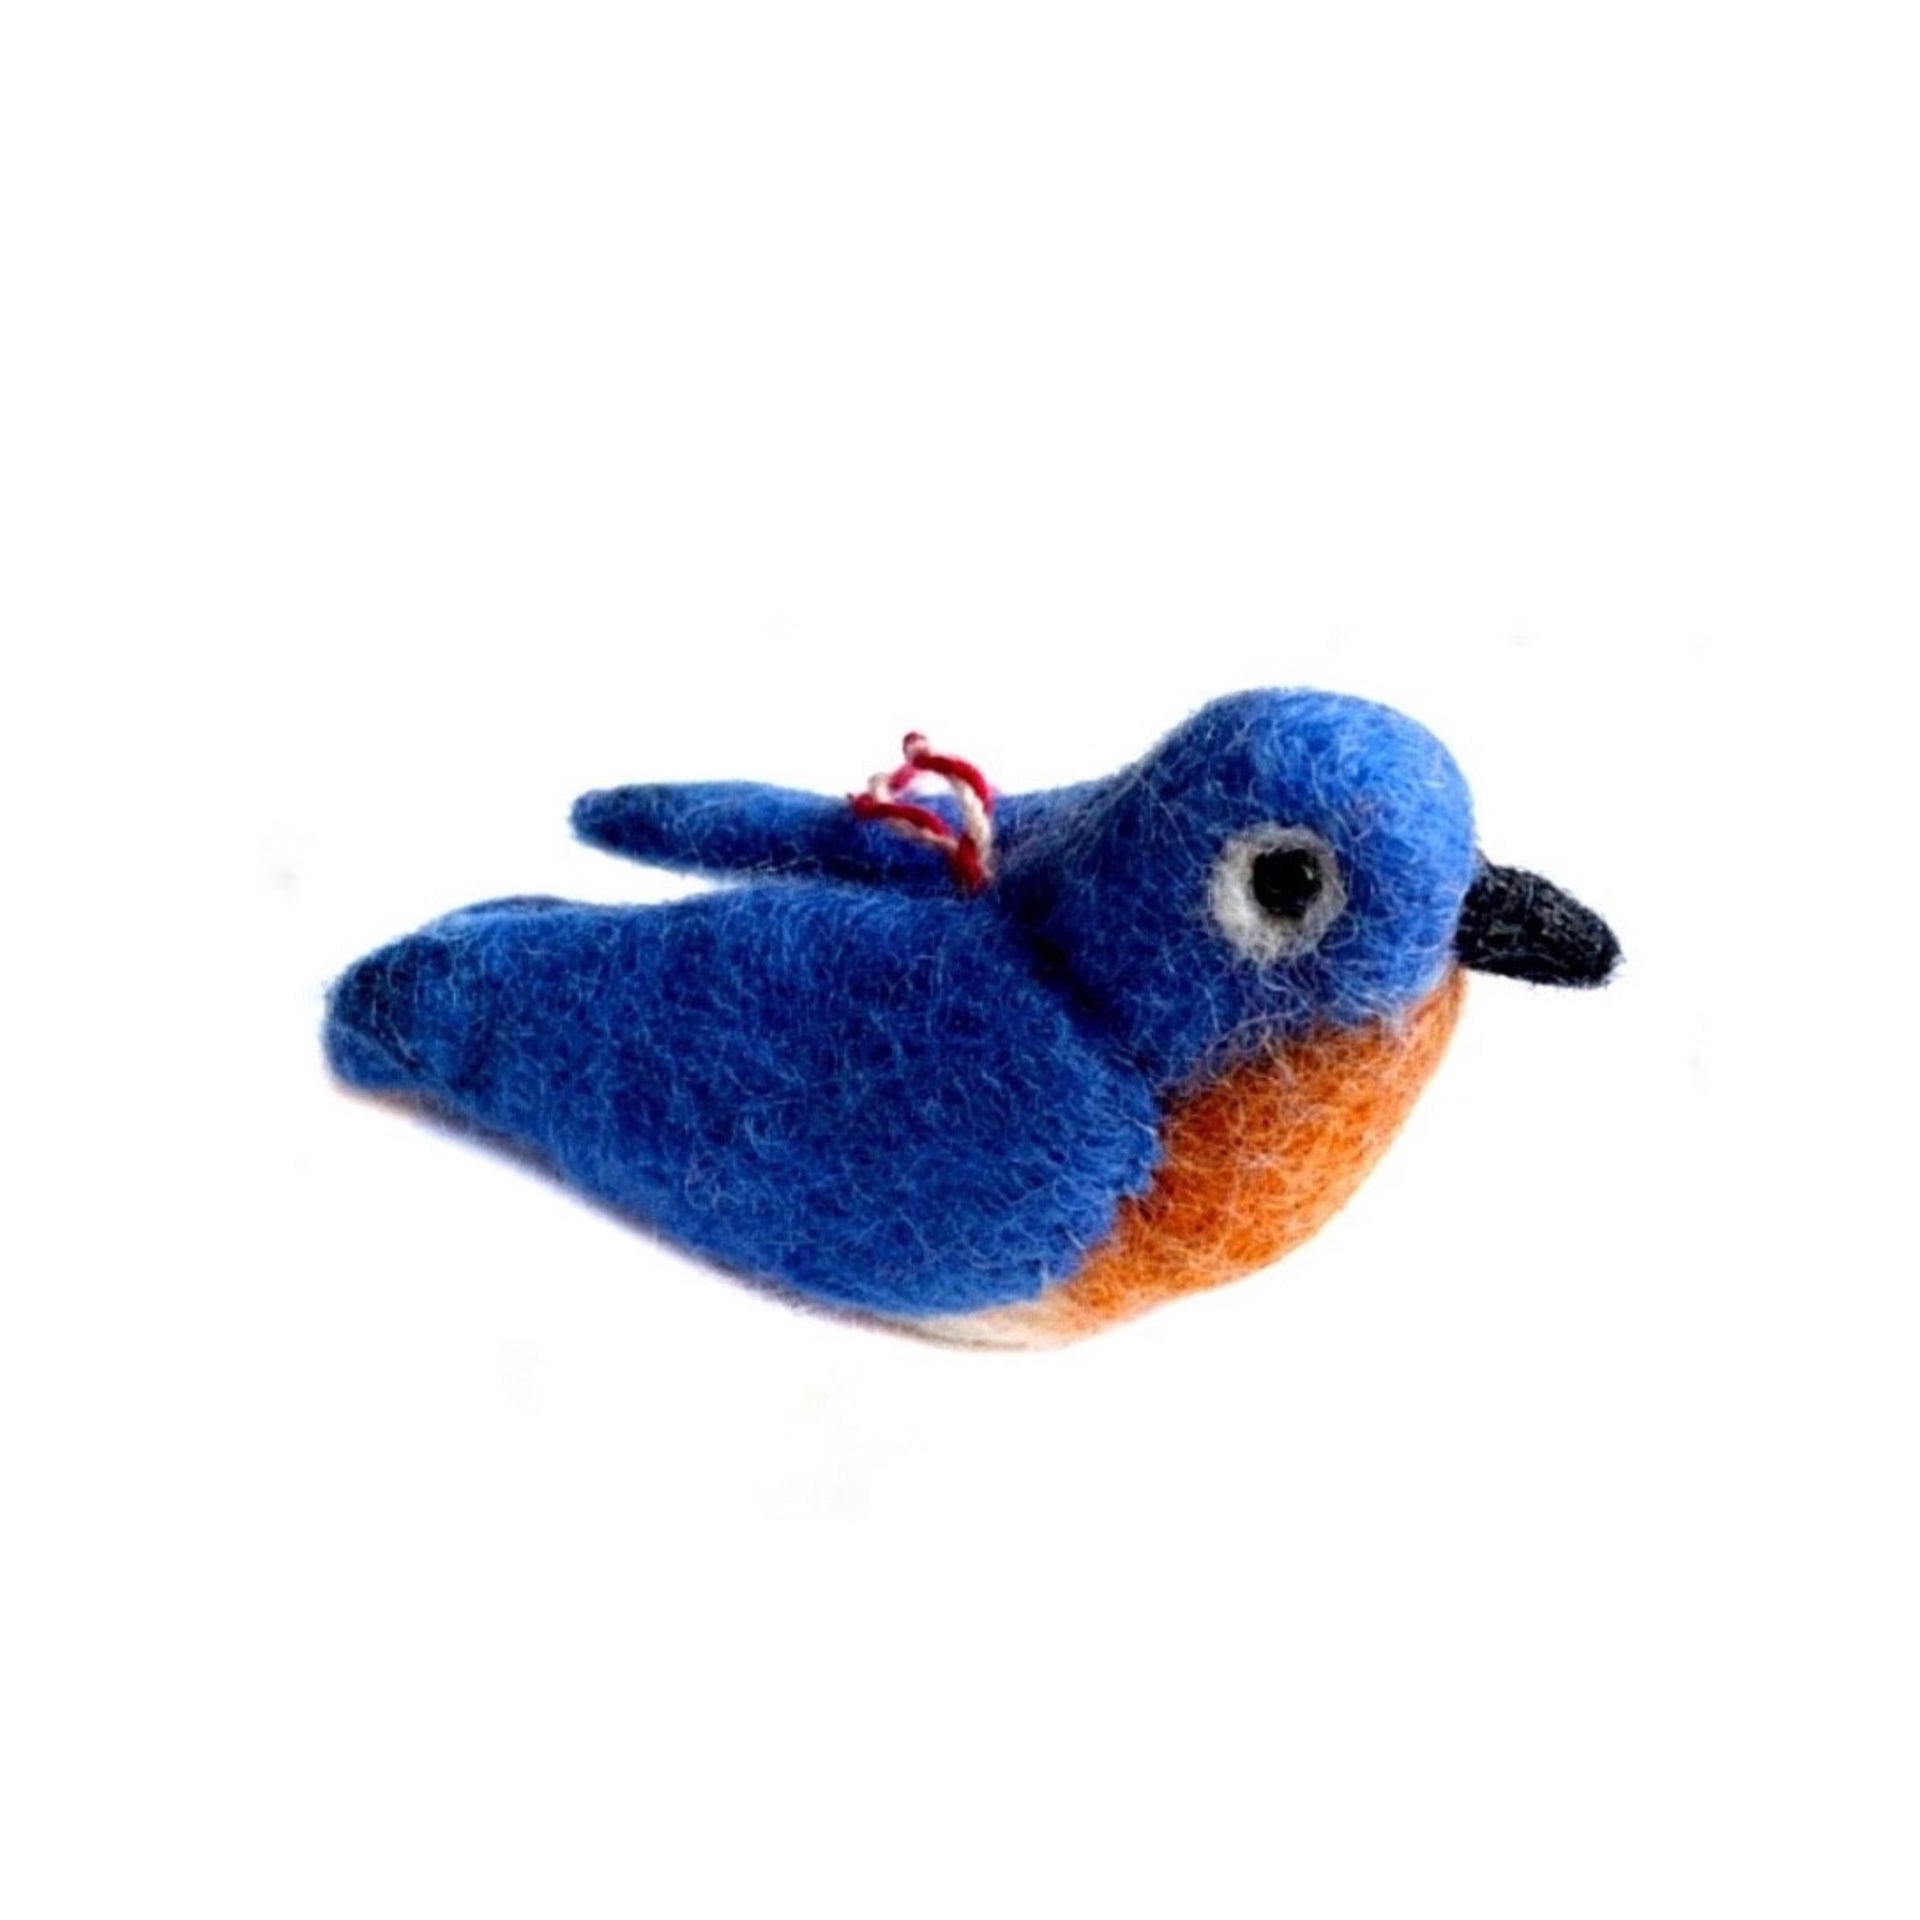 Felt Wool Ornament Blue Bird Ornament Fair Trade